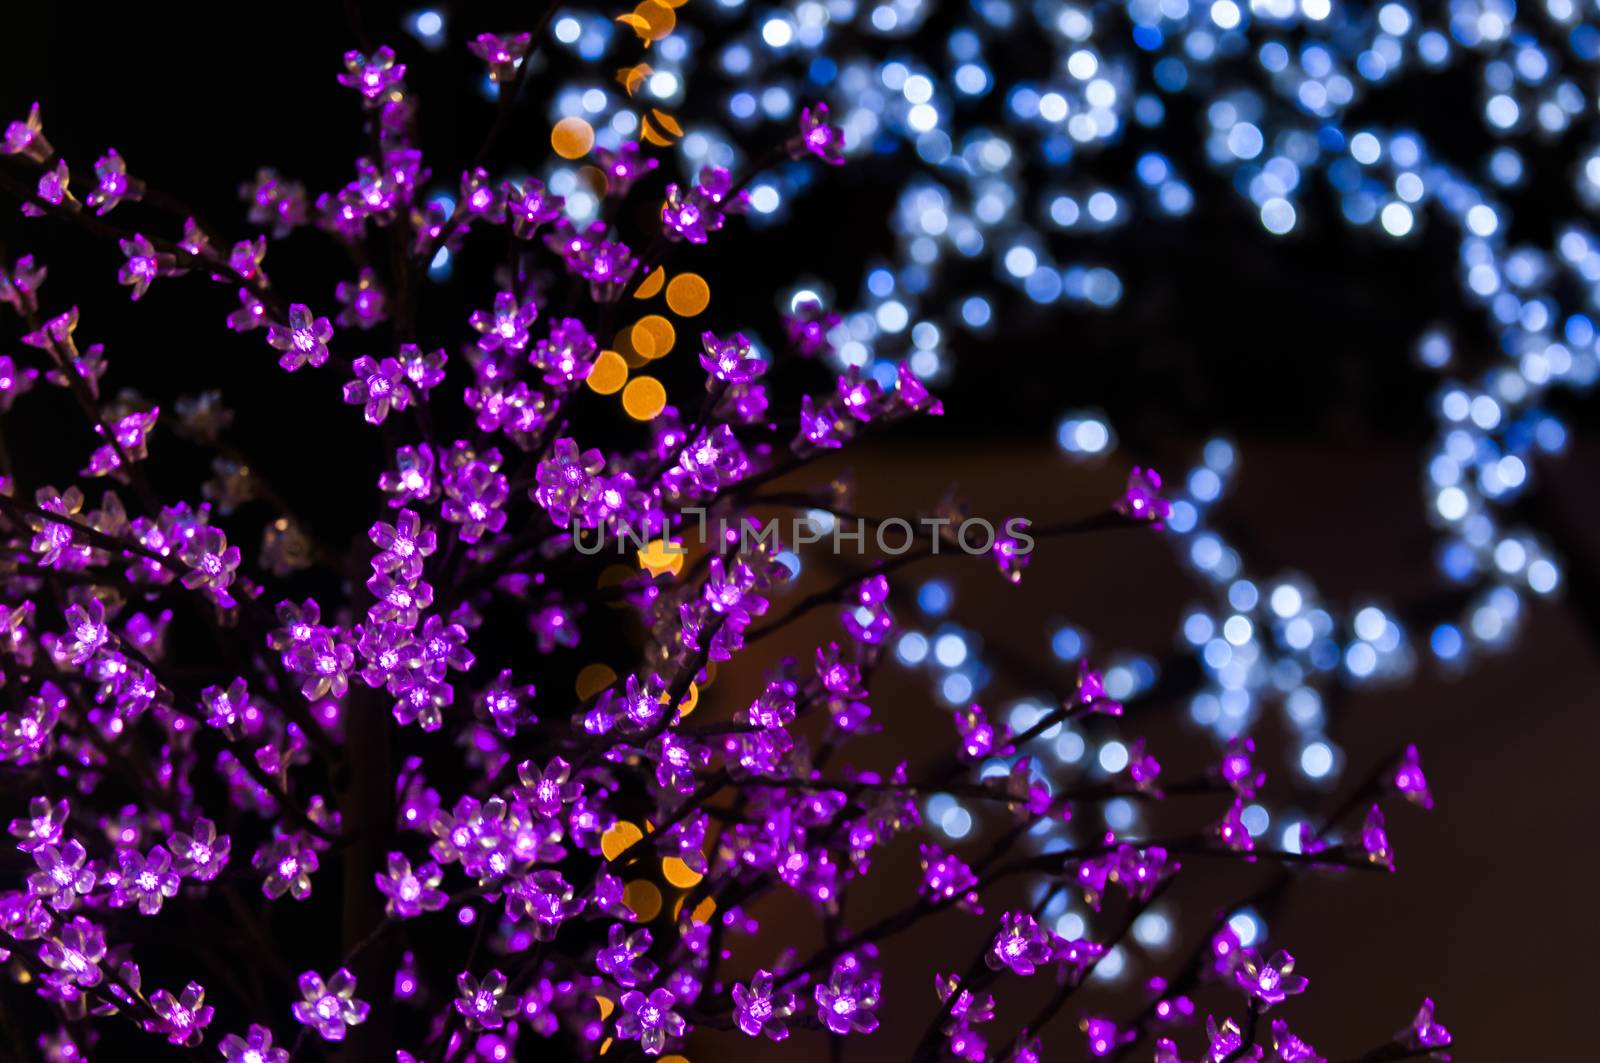 Purple and blury blue lights in backround by vangelis